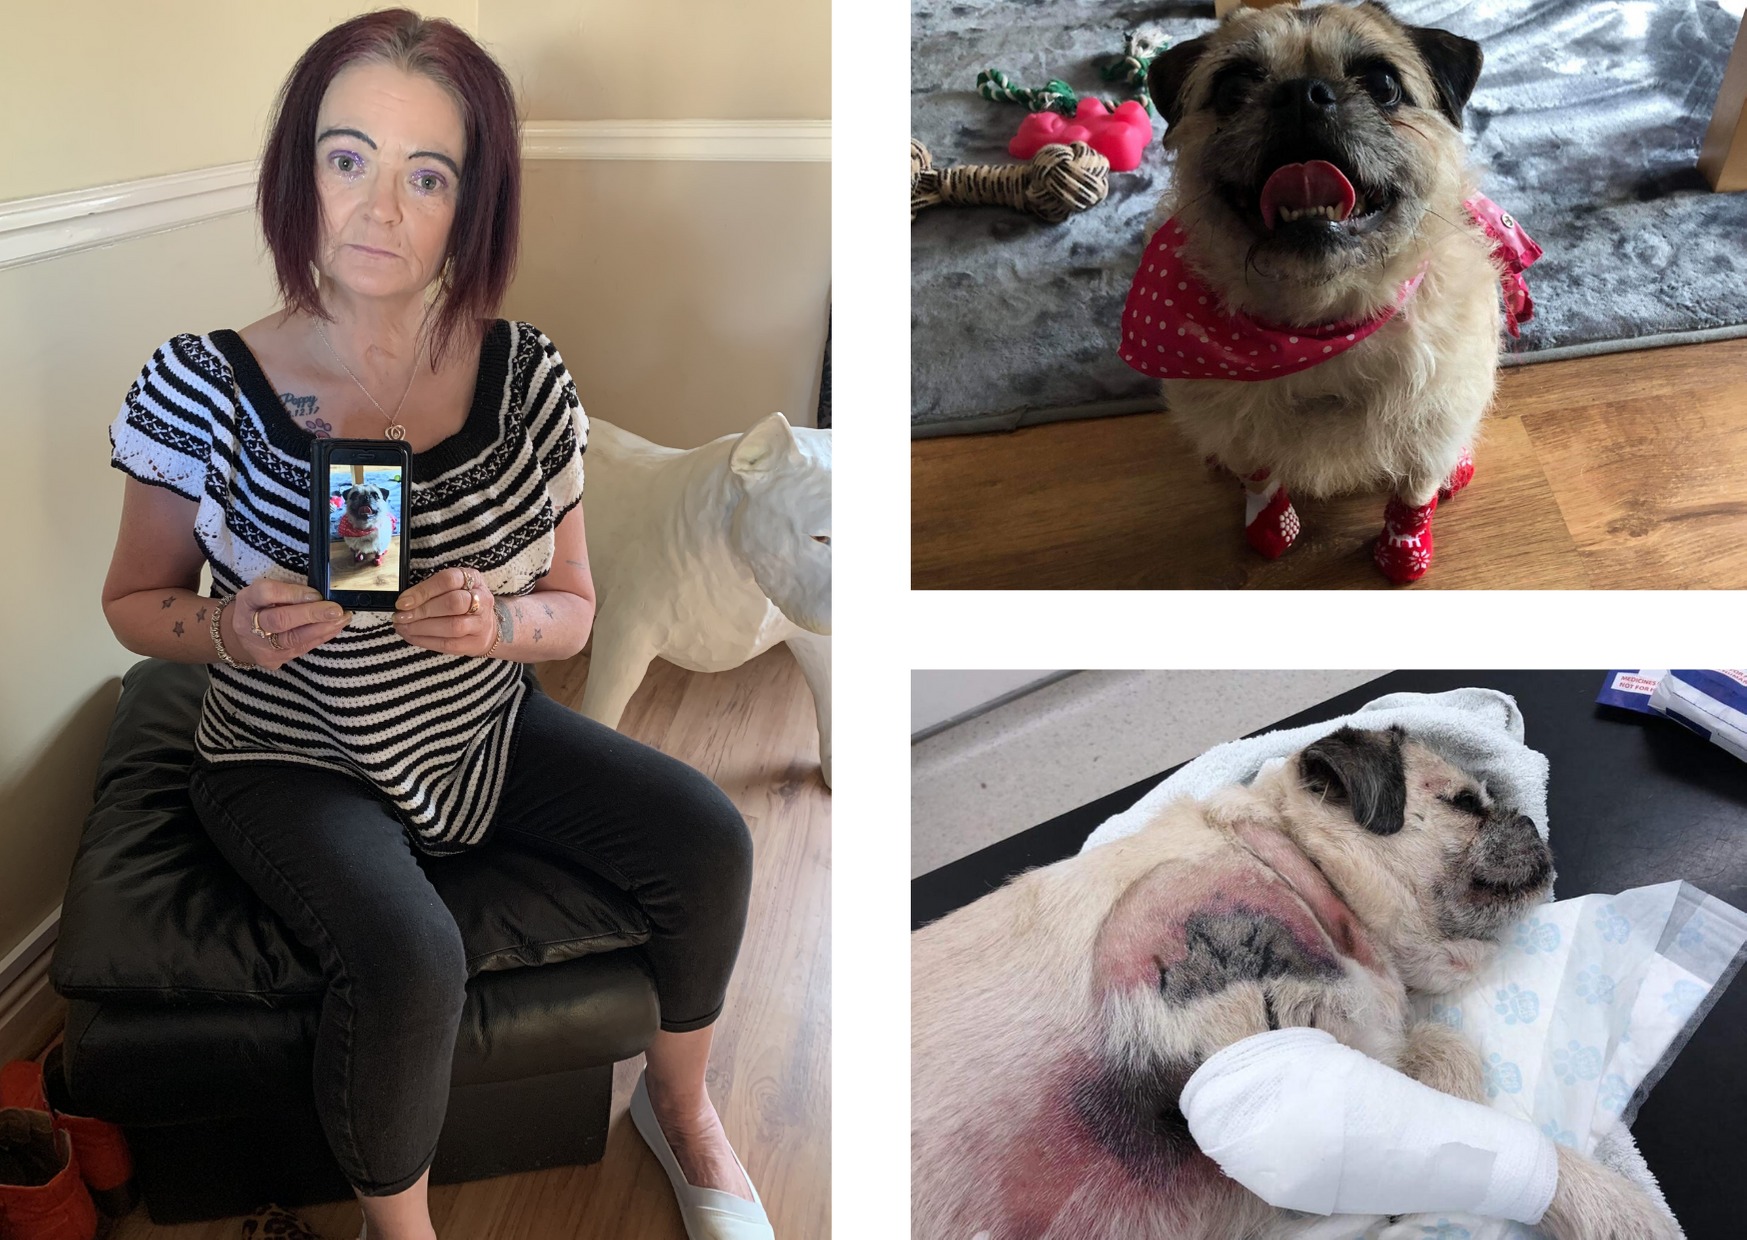 Owner S Dangerous Dog Warning As Beloved Pug Dies Six Days After Vicious Attack In Kingsdown Swindon Advertiser